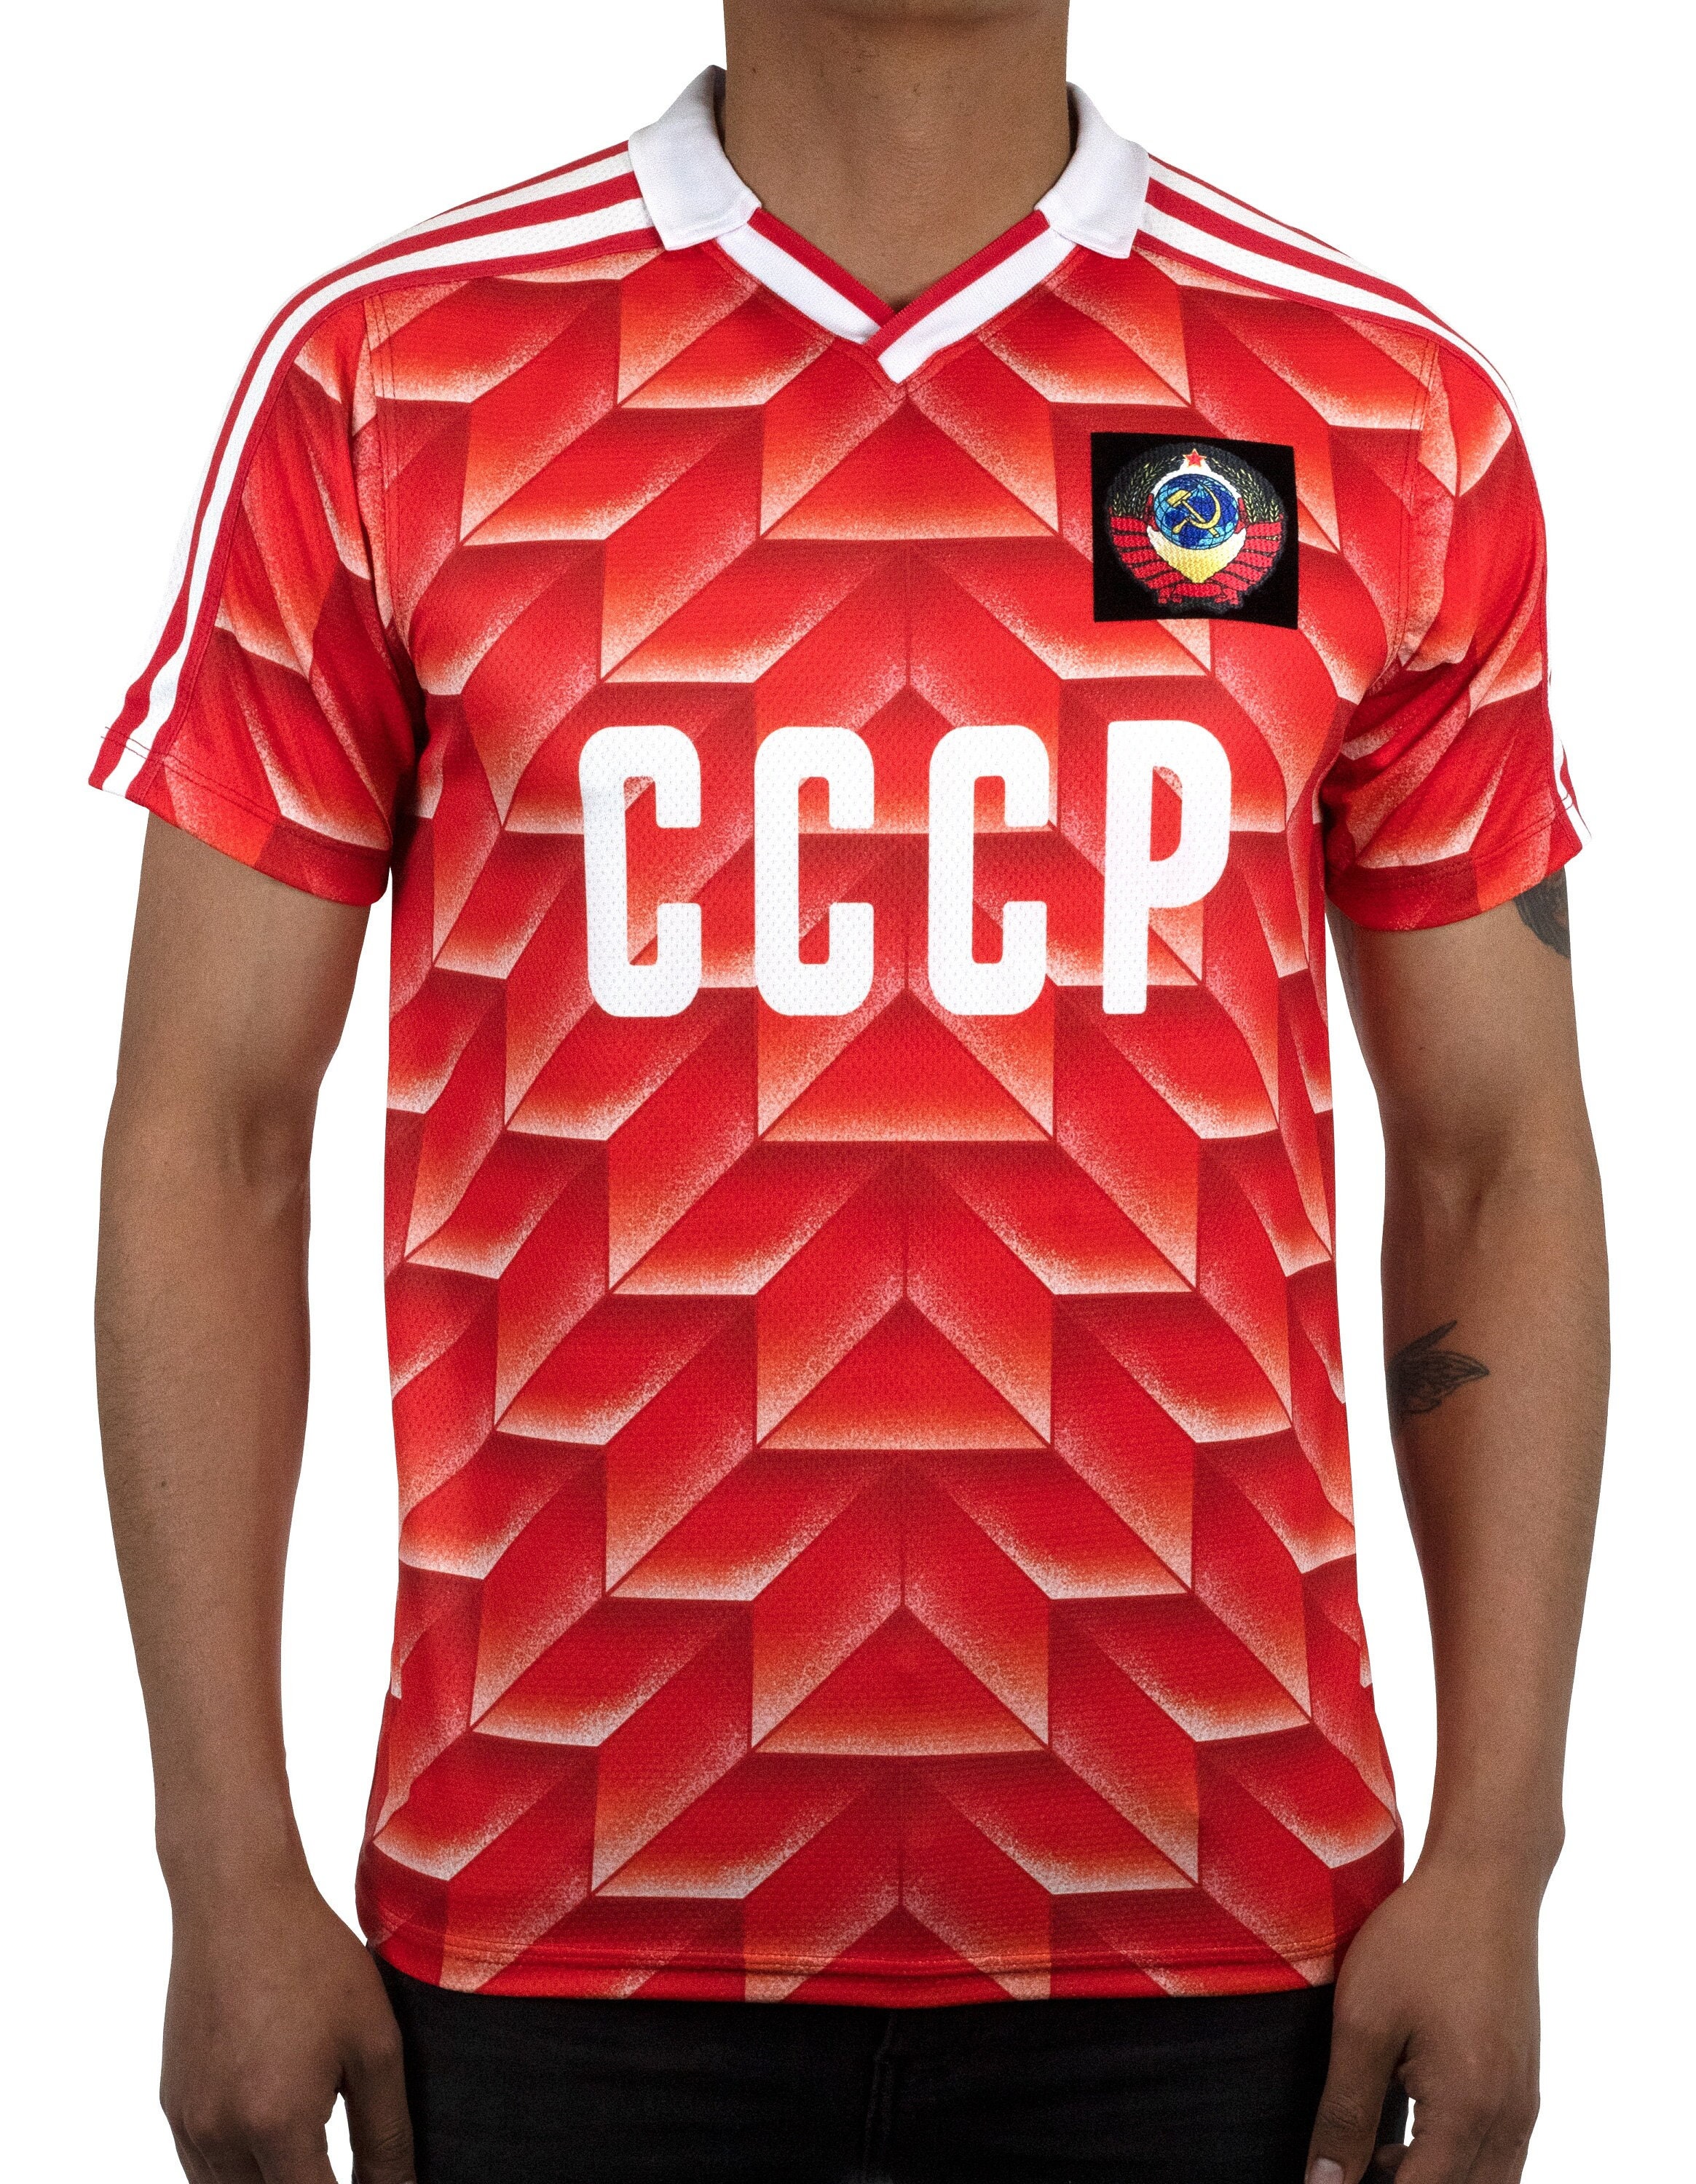 Retro Classic 1987 1988 1989 1990 1991 Soccer Jerseys CCCP Union Of Soviet  Socialist Republics USSR Retro Football Shirt From Xx233792844, $14.67